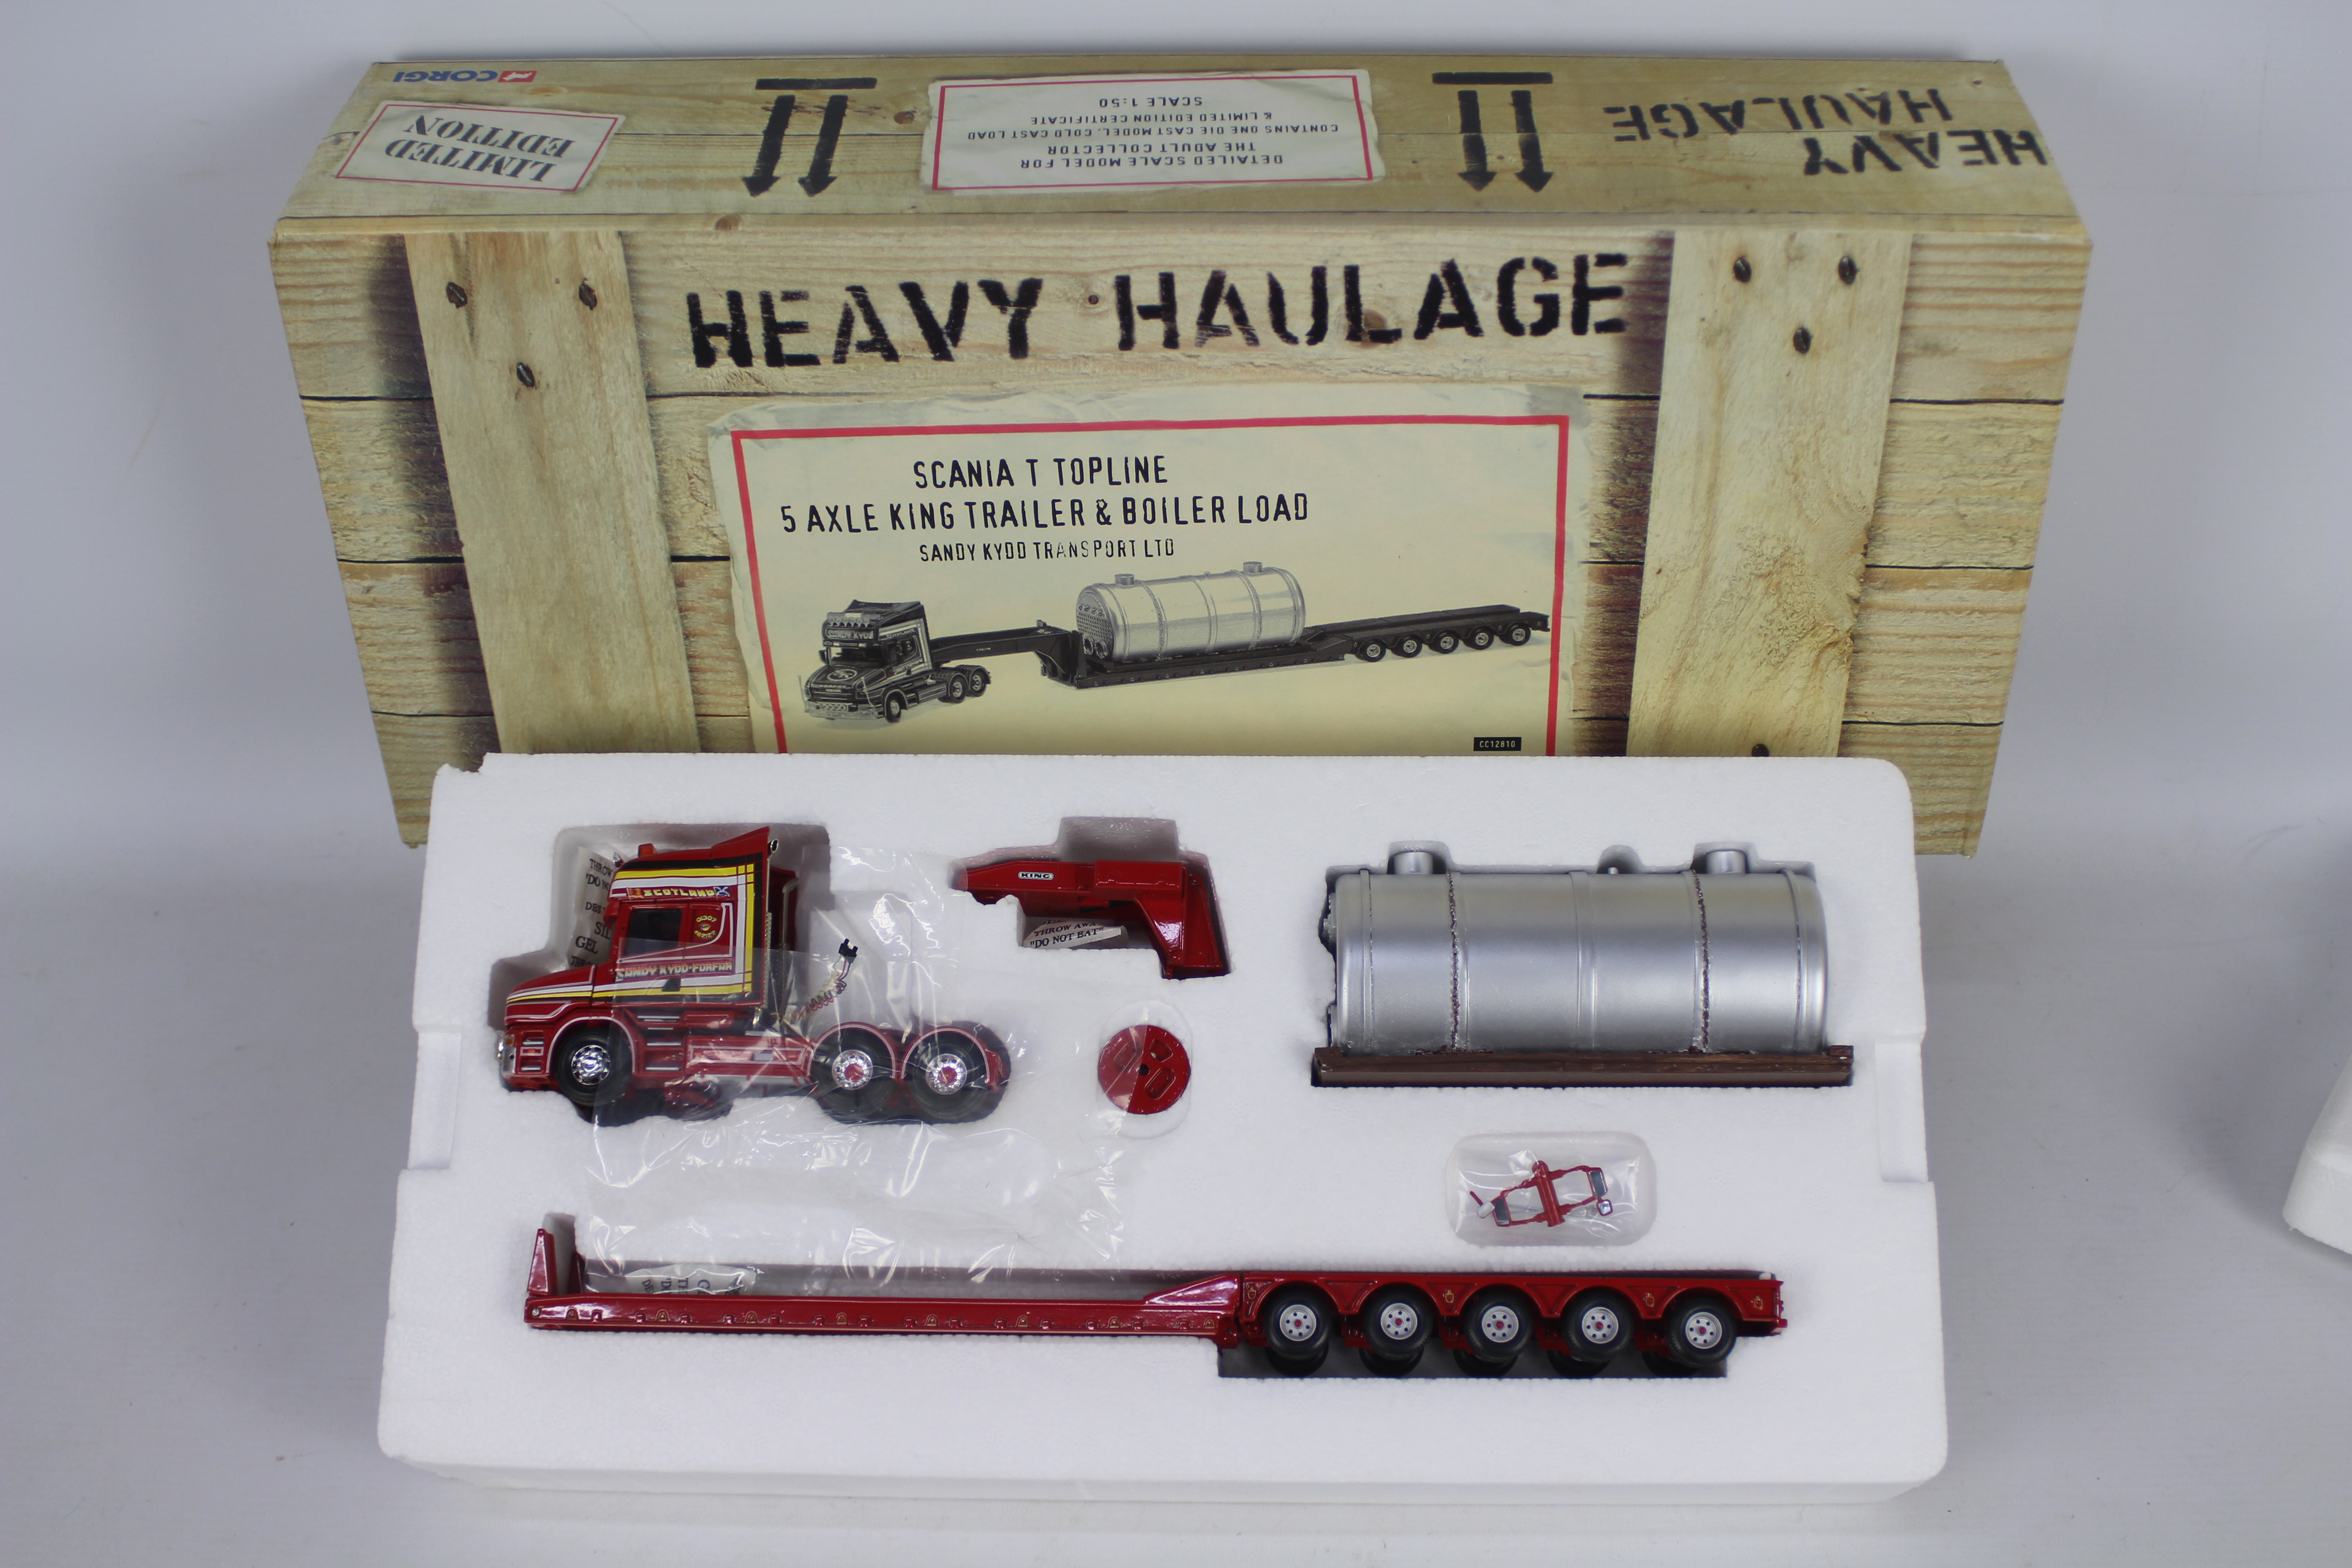 Corgi - Heavy Haulage - A boxed limited edition Scania T Topline 5 axle King trailer & boiler load